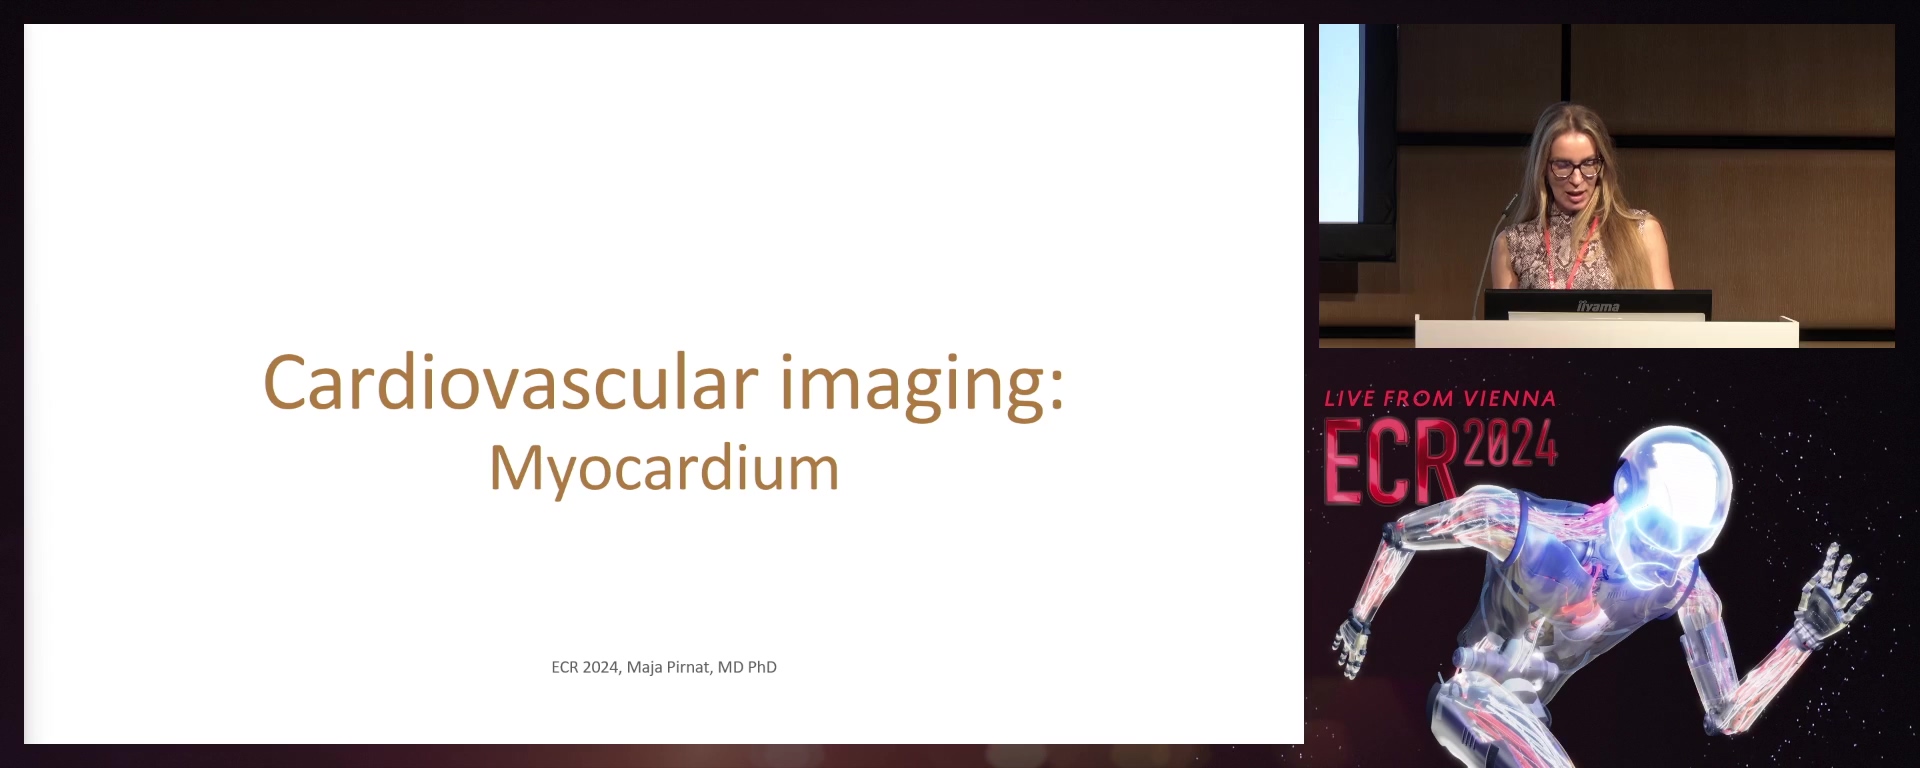 Cardiovascular imaging: myocardium